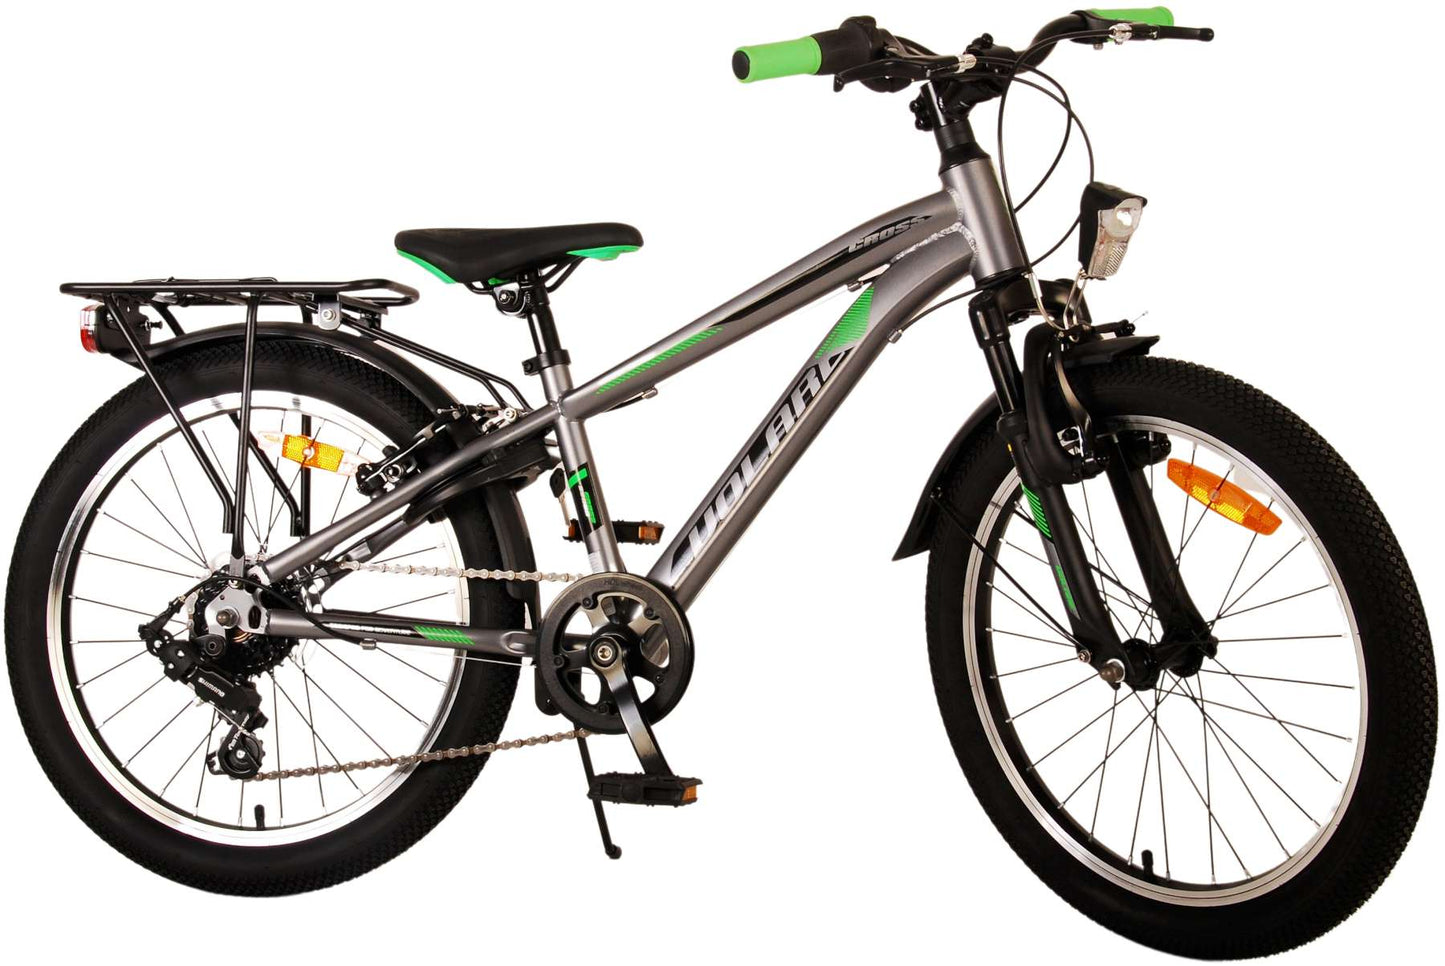 Bicycle per bambini Vlatare Cross - Boys - 20 pollici - Grigio - 6 marce